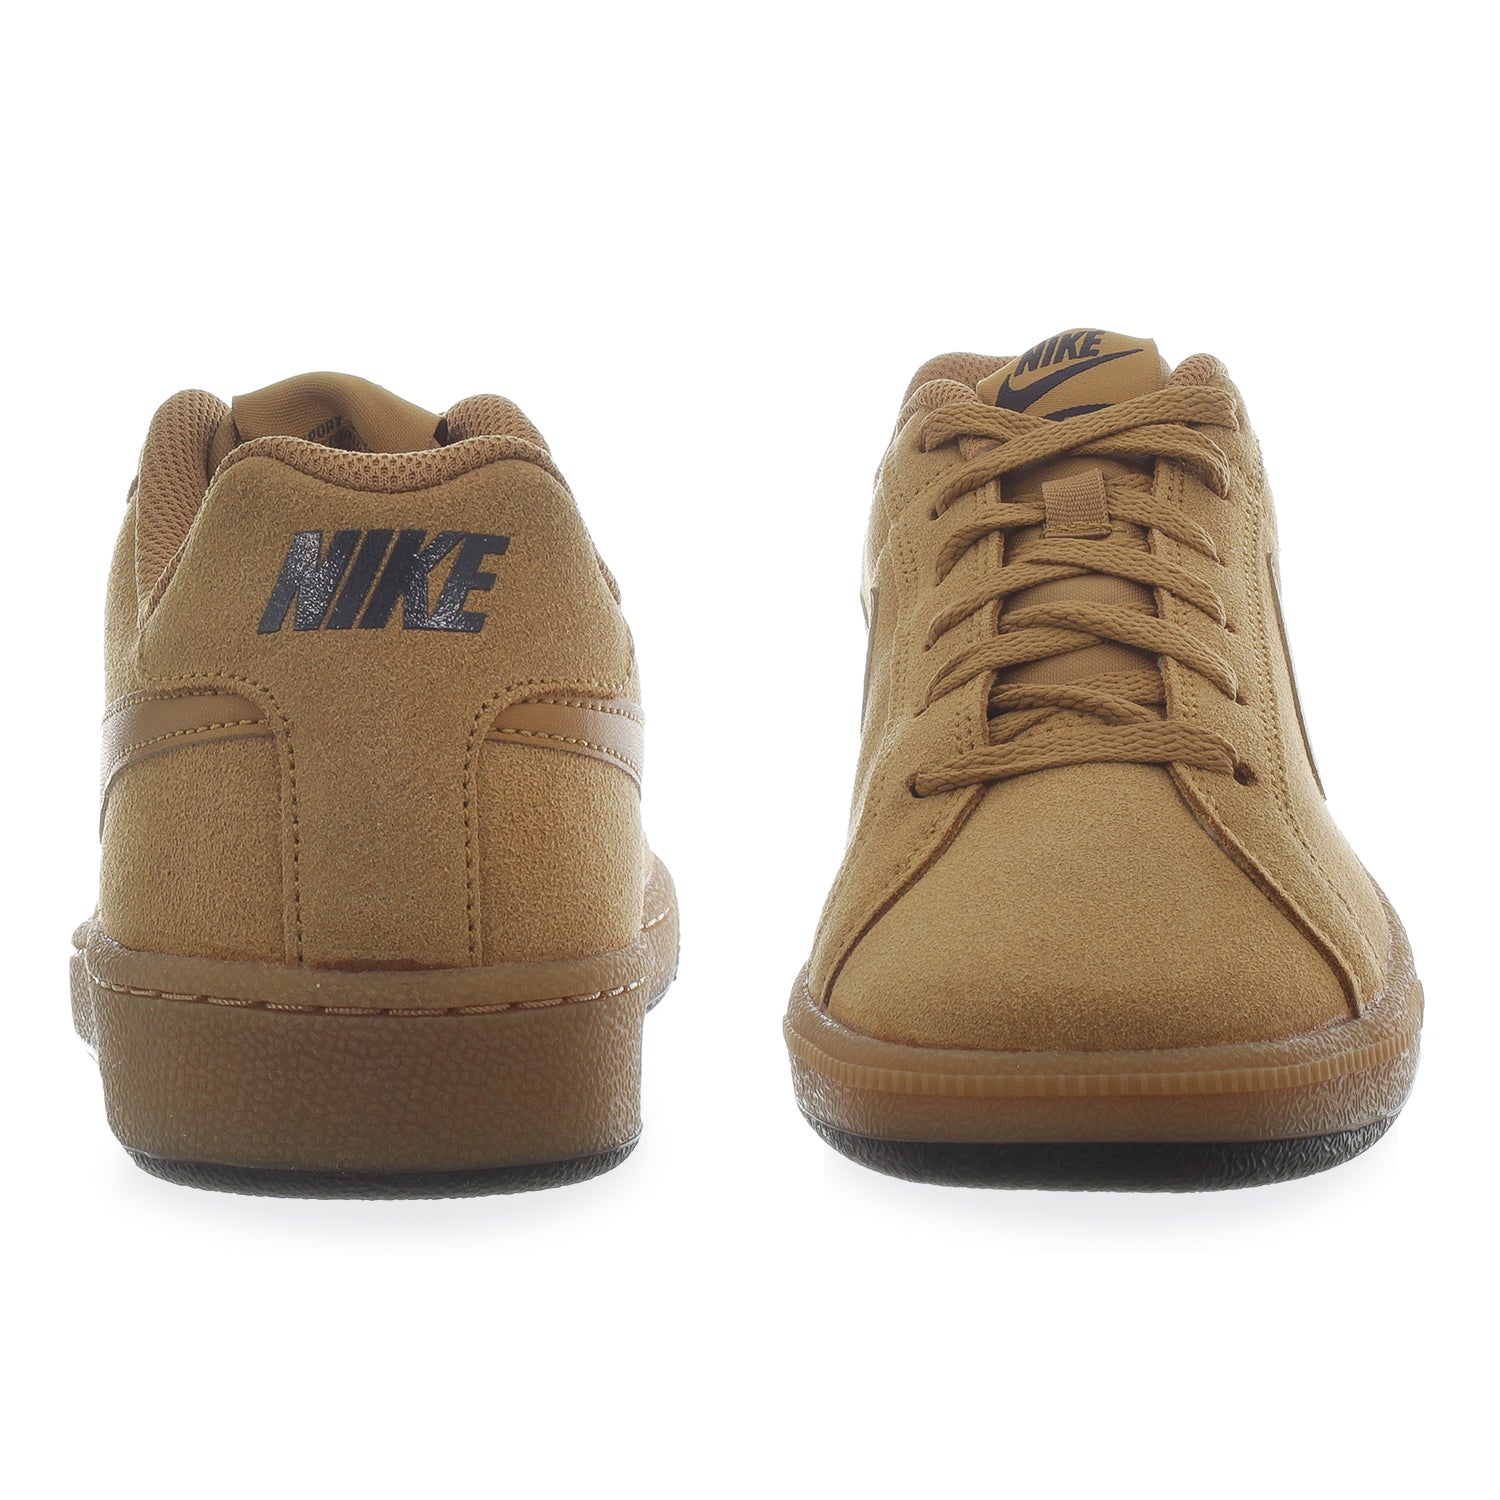 Tenis Nike Court Royale Suede - 819802700 Amarillo - Hombre | Shoelander.com - Footwear Retail